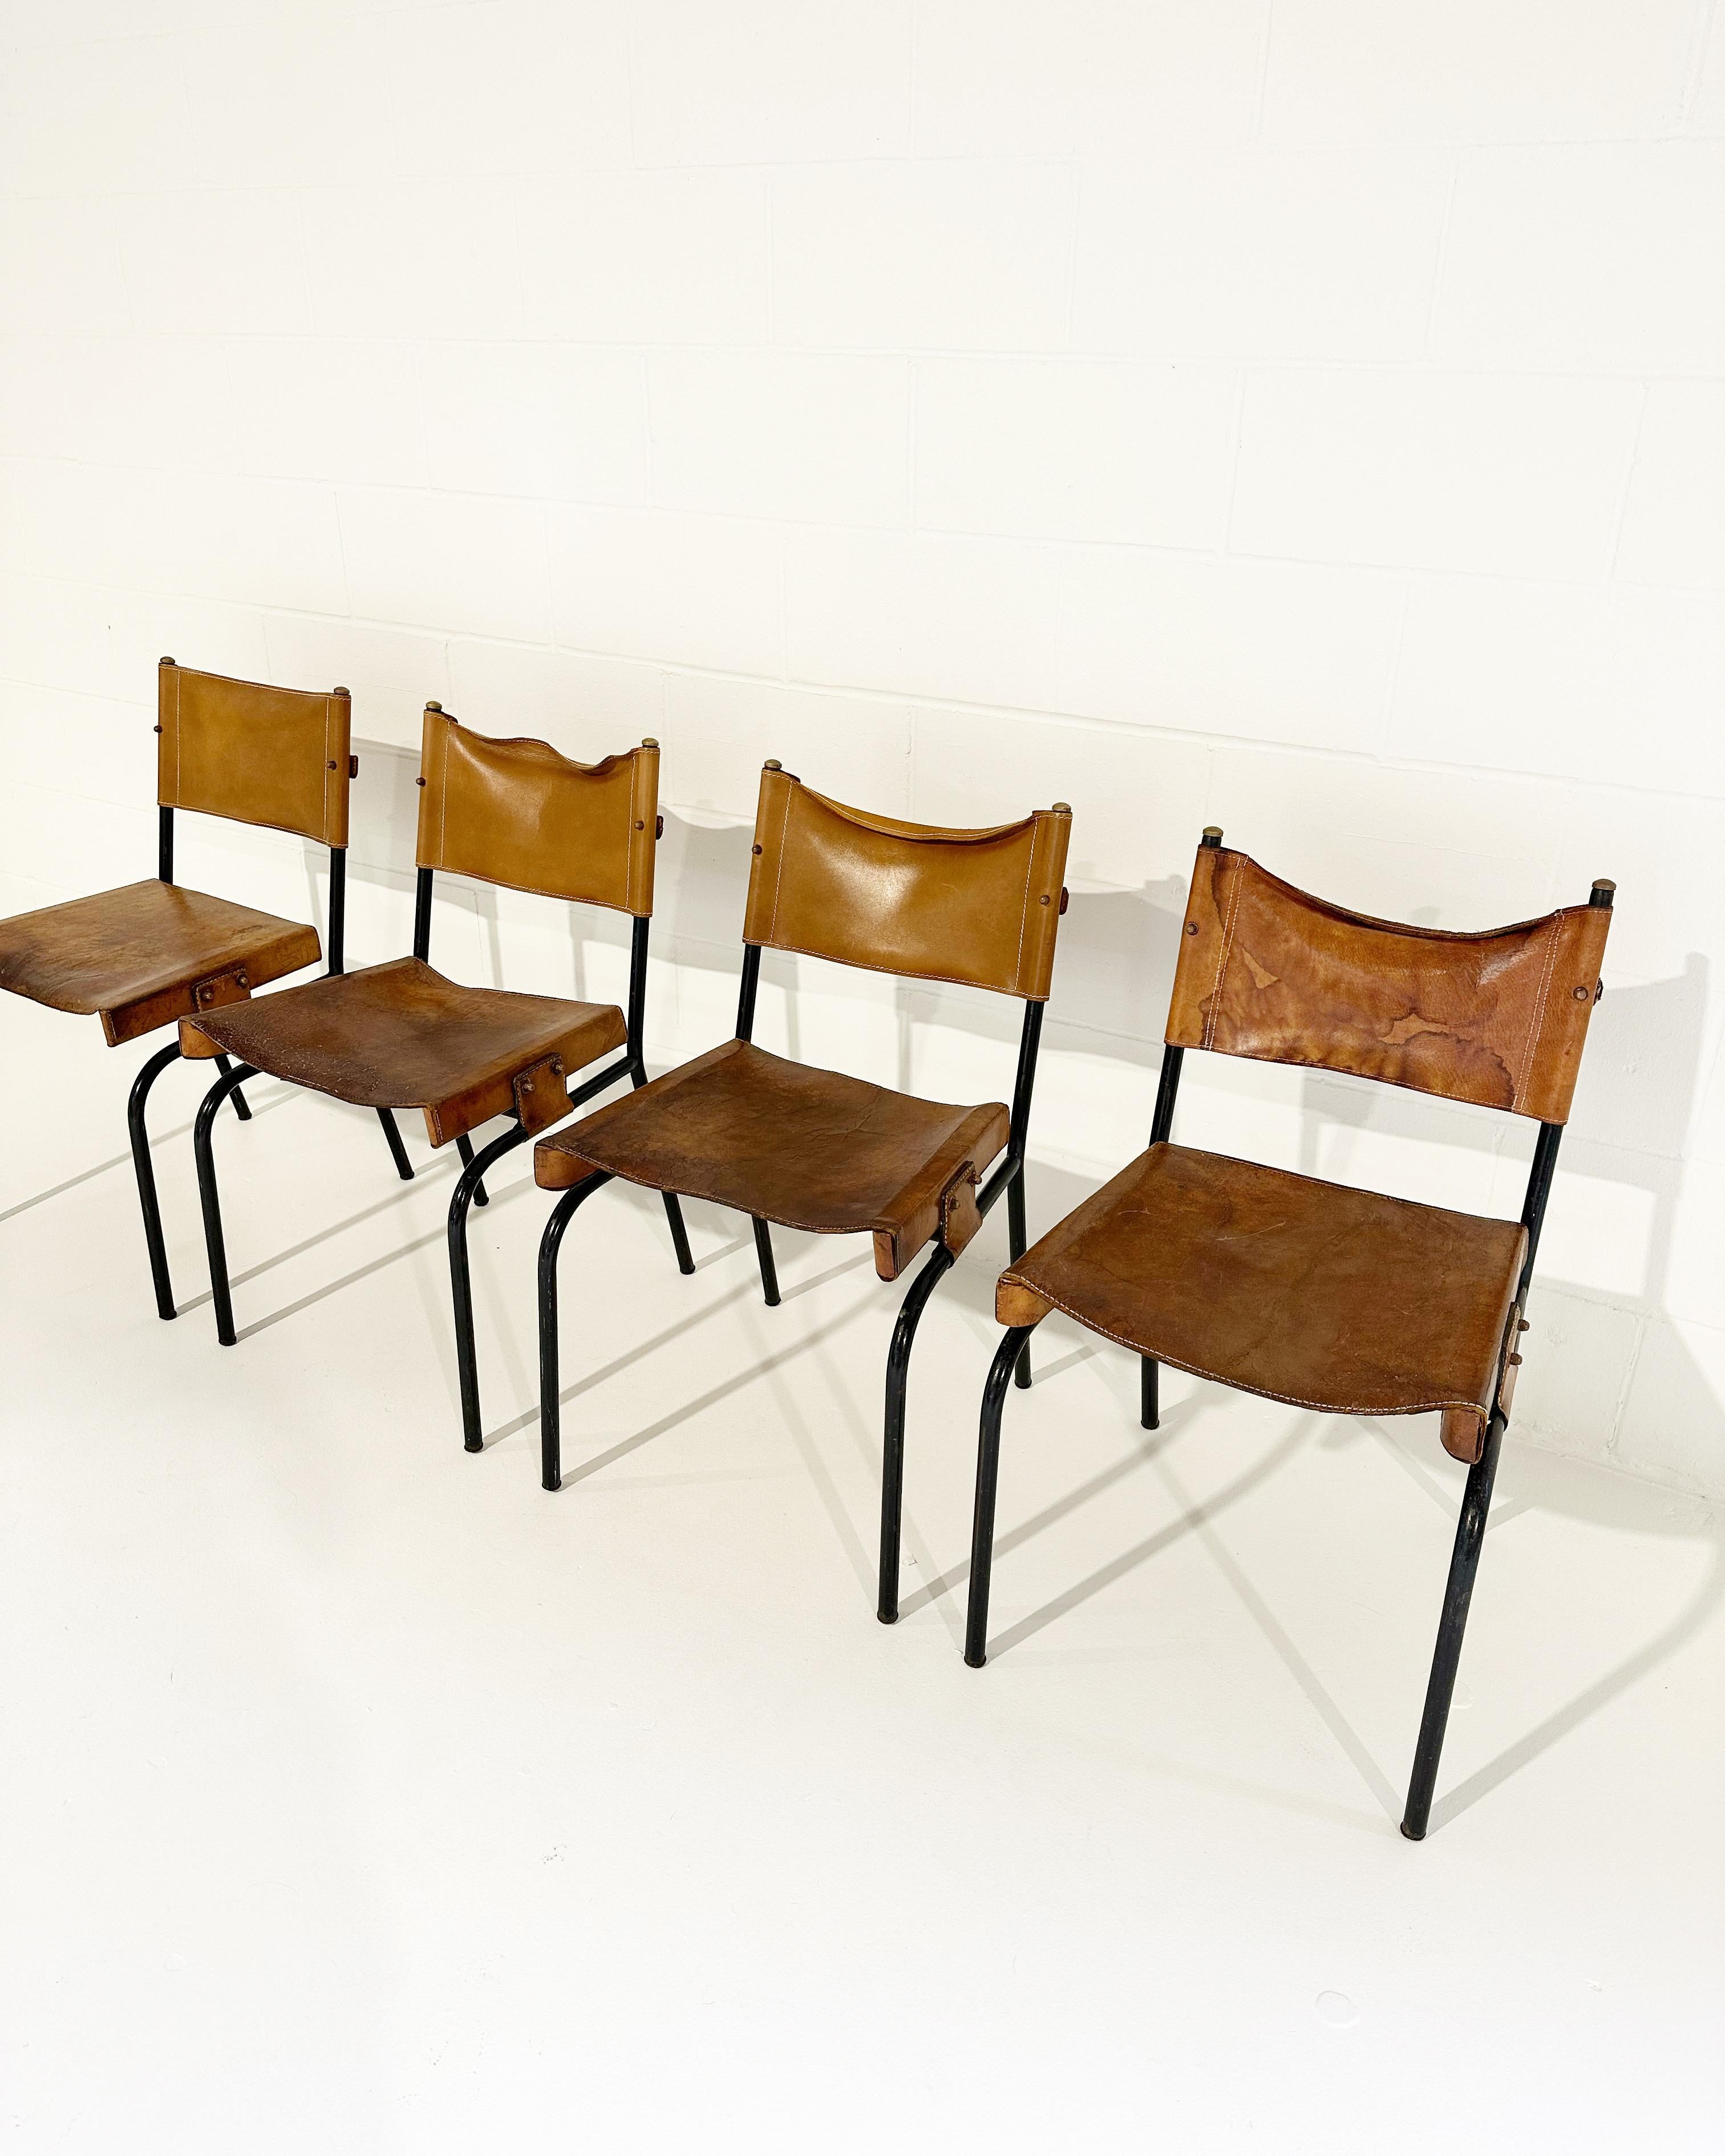 Vintage-Beistellstühle aus Leder von Jacques Adnet, 4er-Set (Art déco) im Angebot